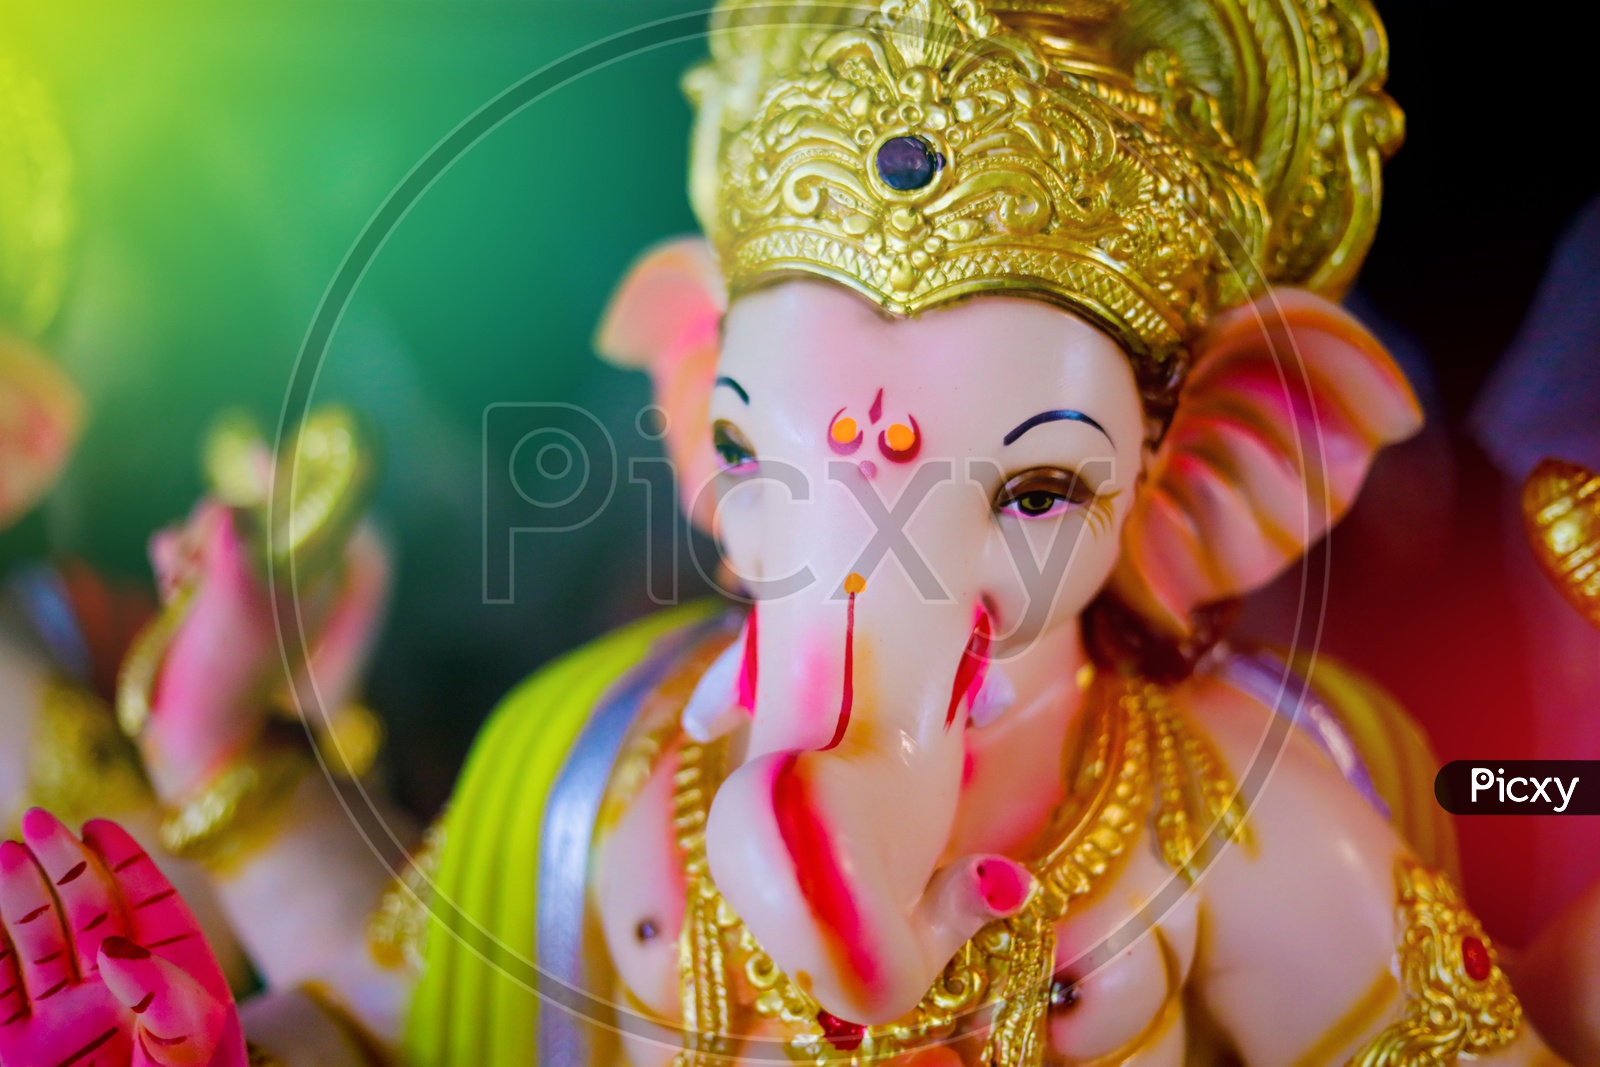 Close up shot of Lord Ganesha Idol / Ganesh Idol